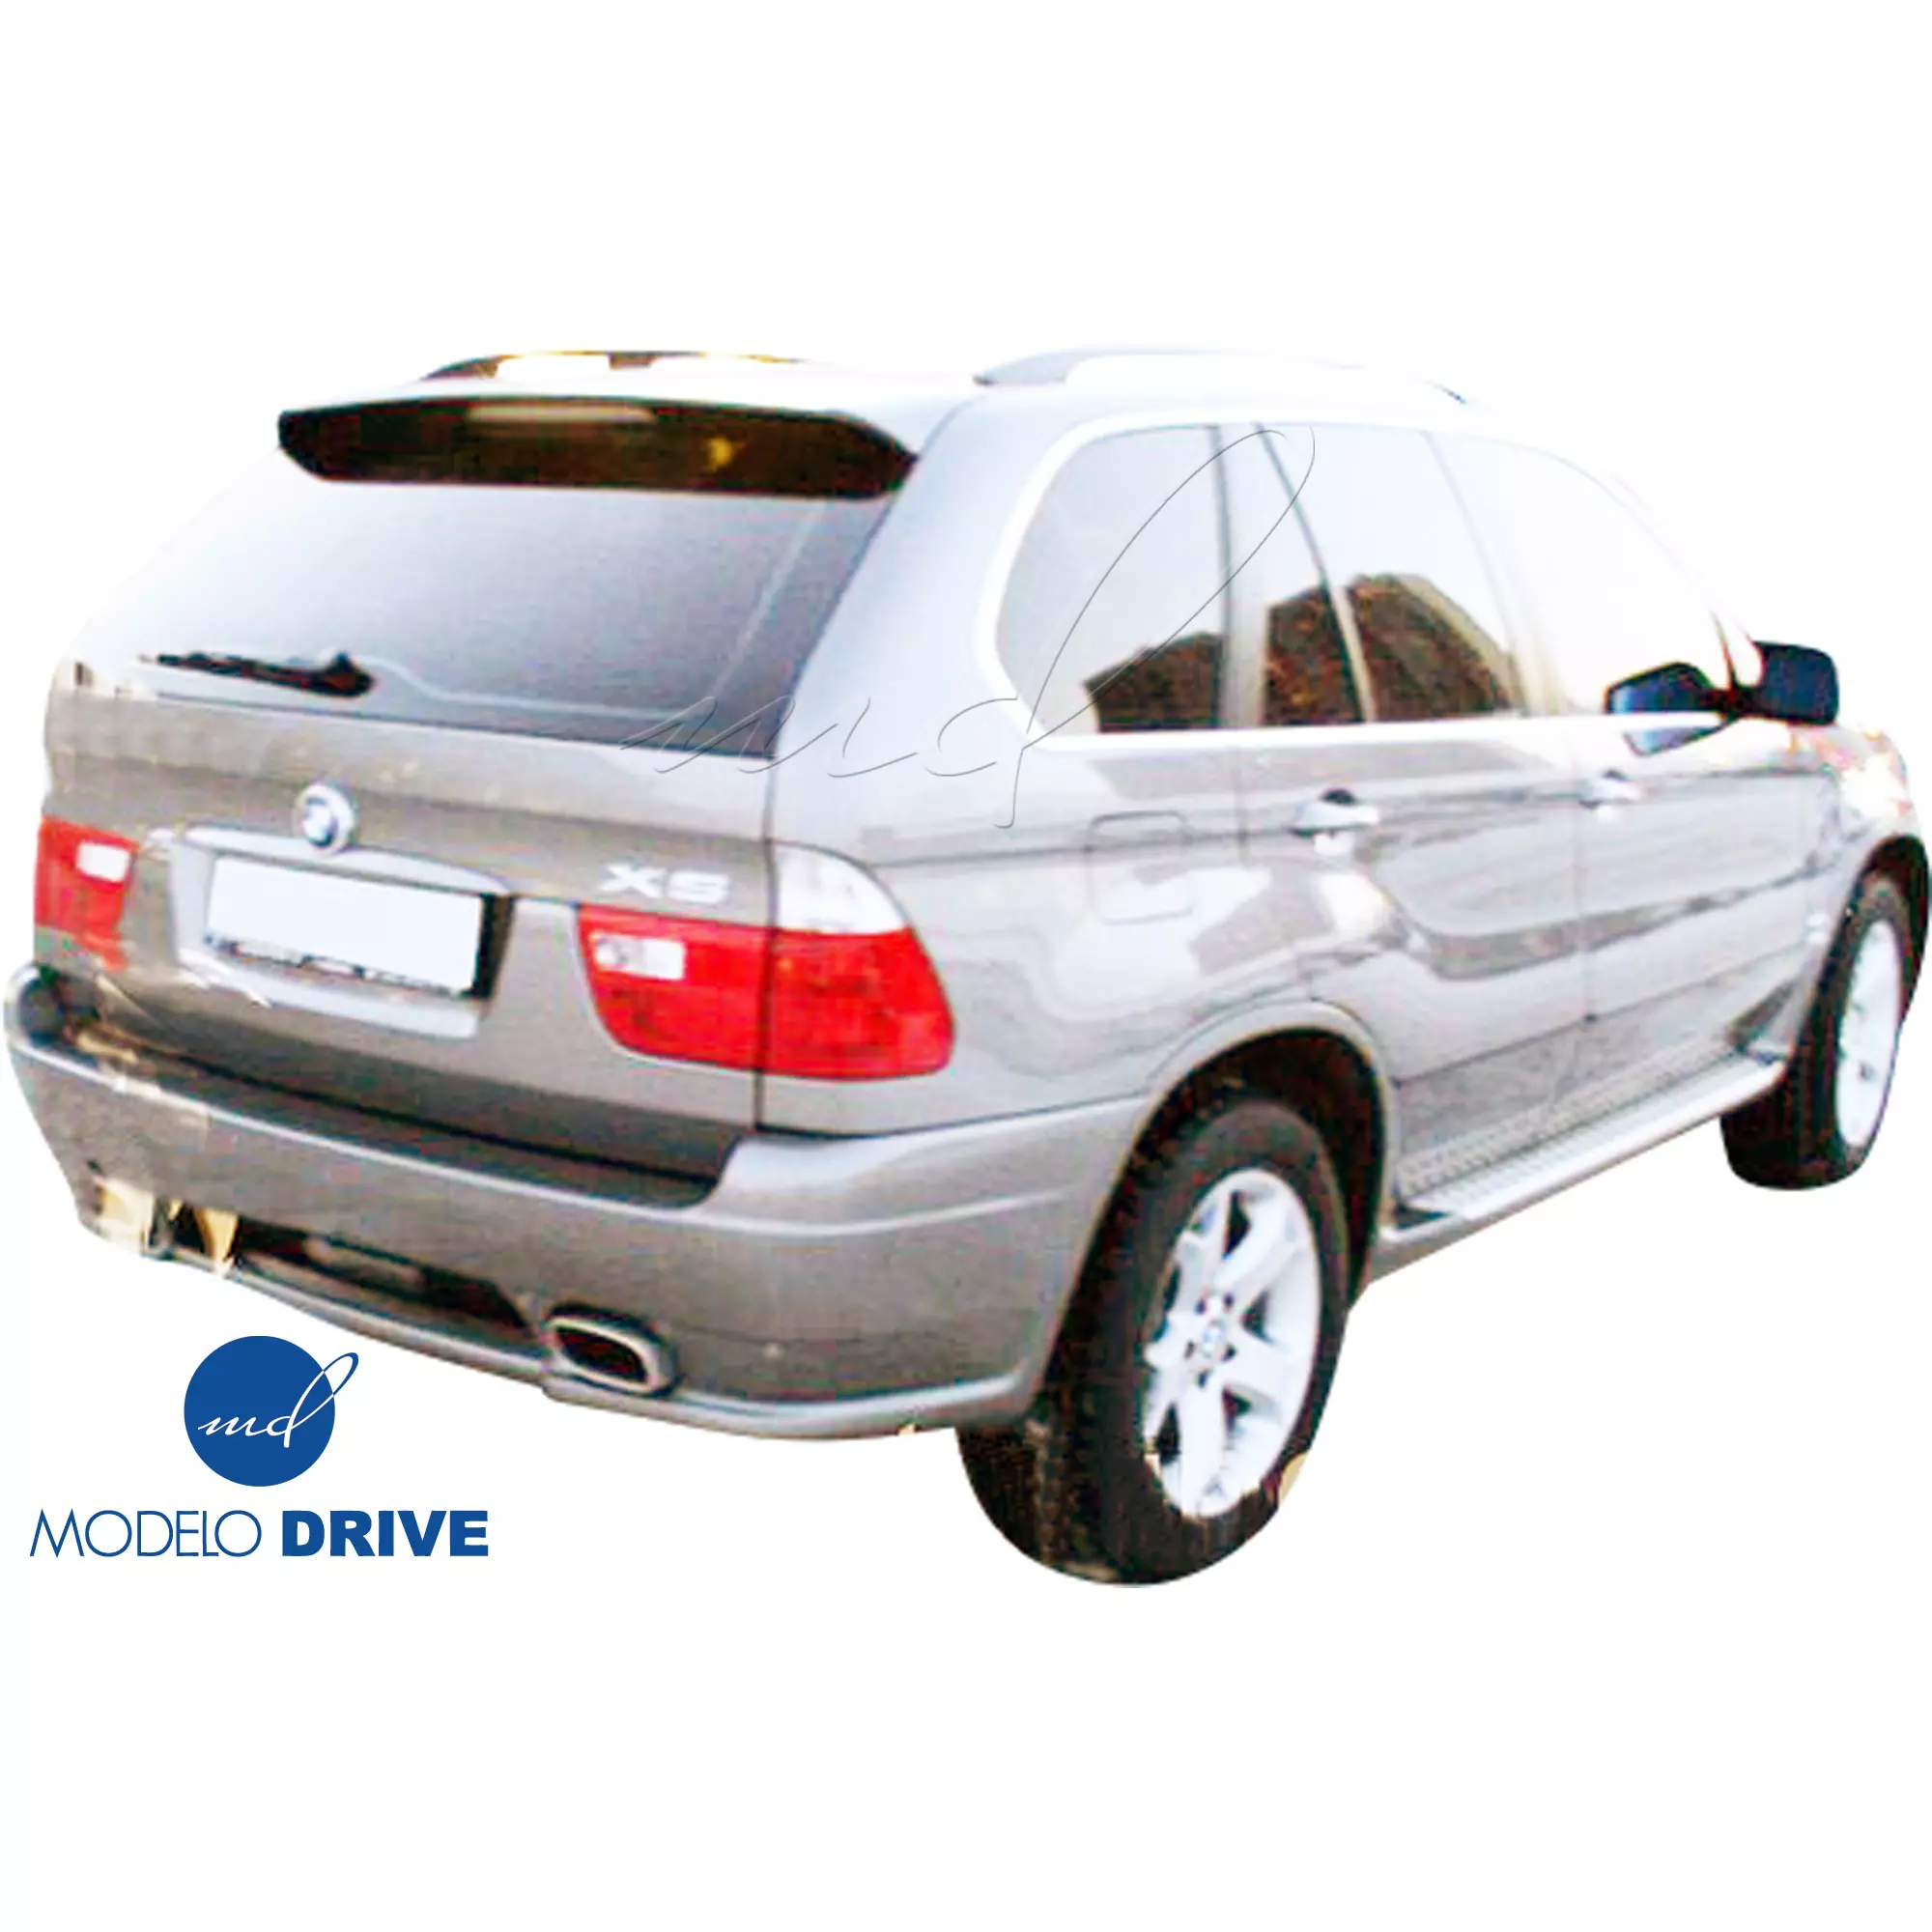 ModeloDrive FRP HAMA Body Kit 3pc > BMW X5 E53 2000-2006 > 5dr - Image 11